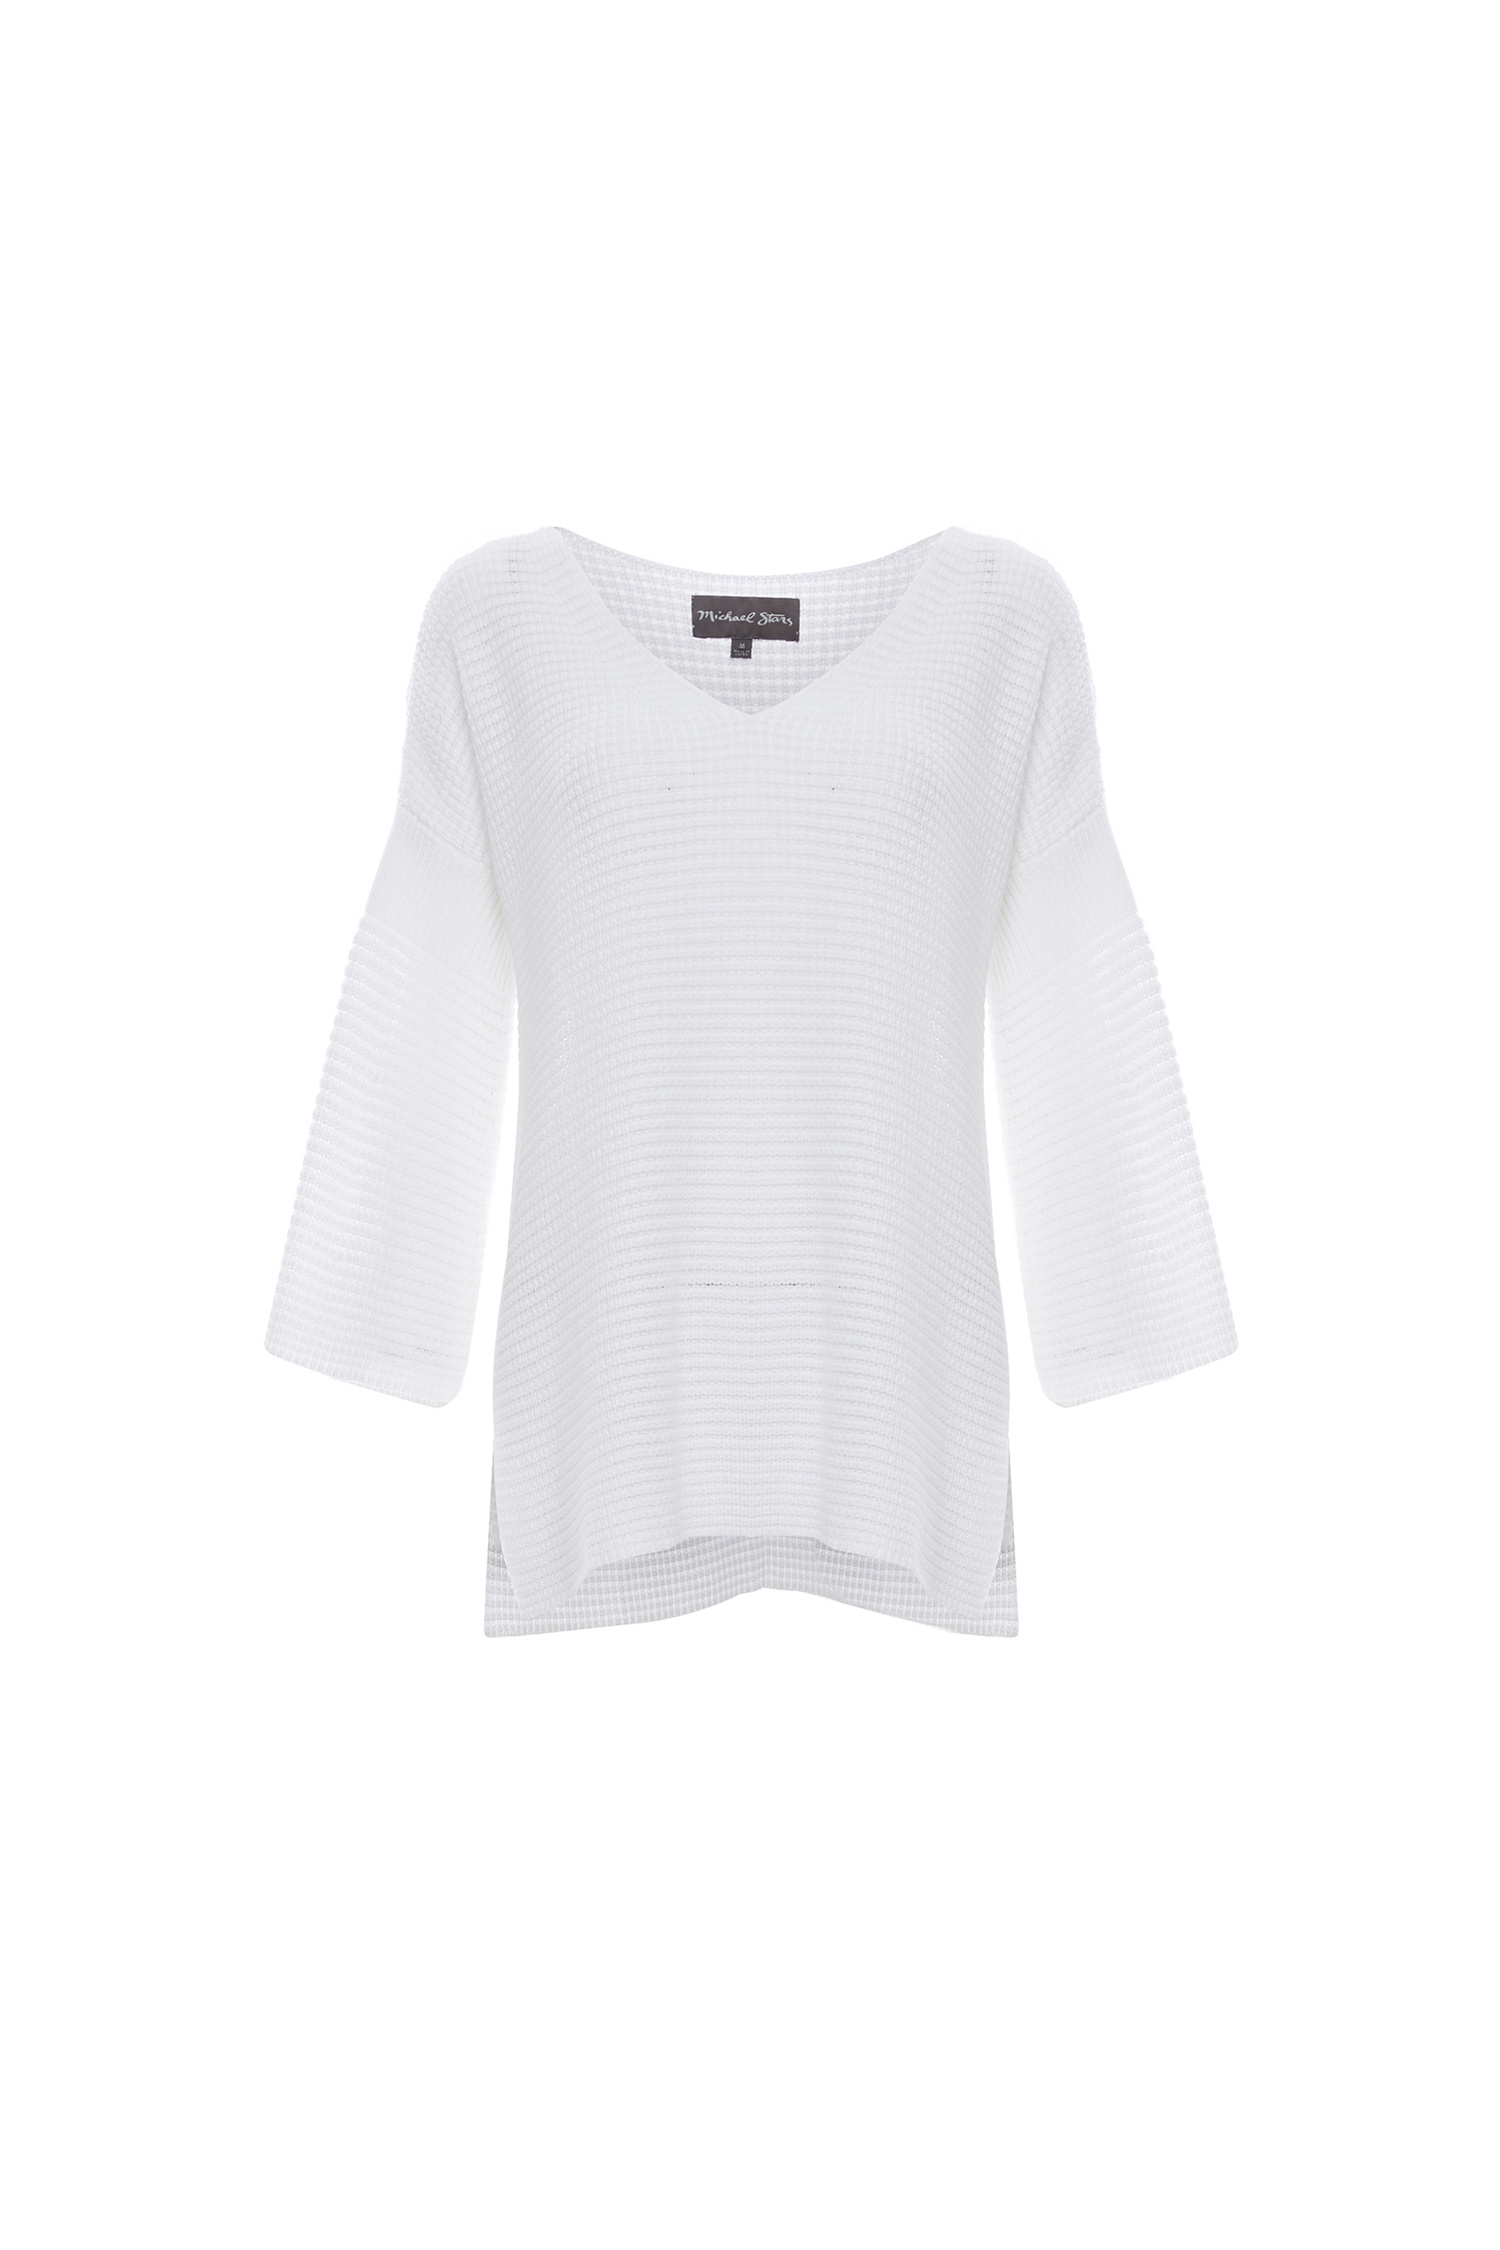 Michael Stars 3/4 Sleeve Sweater in White | DAILYLOOK